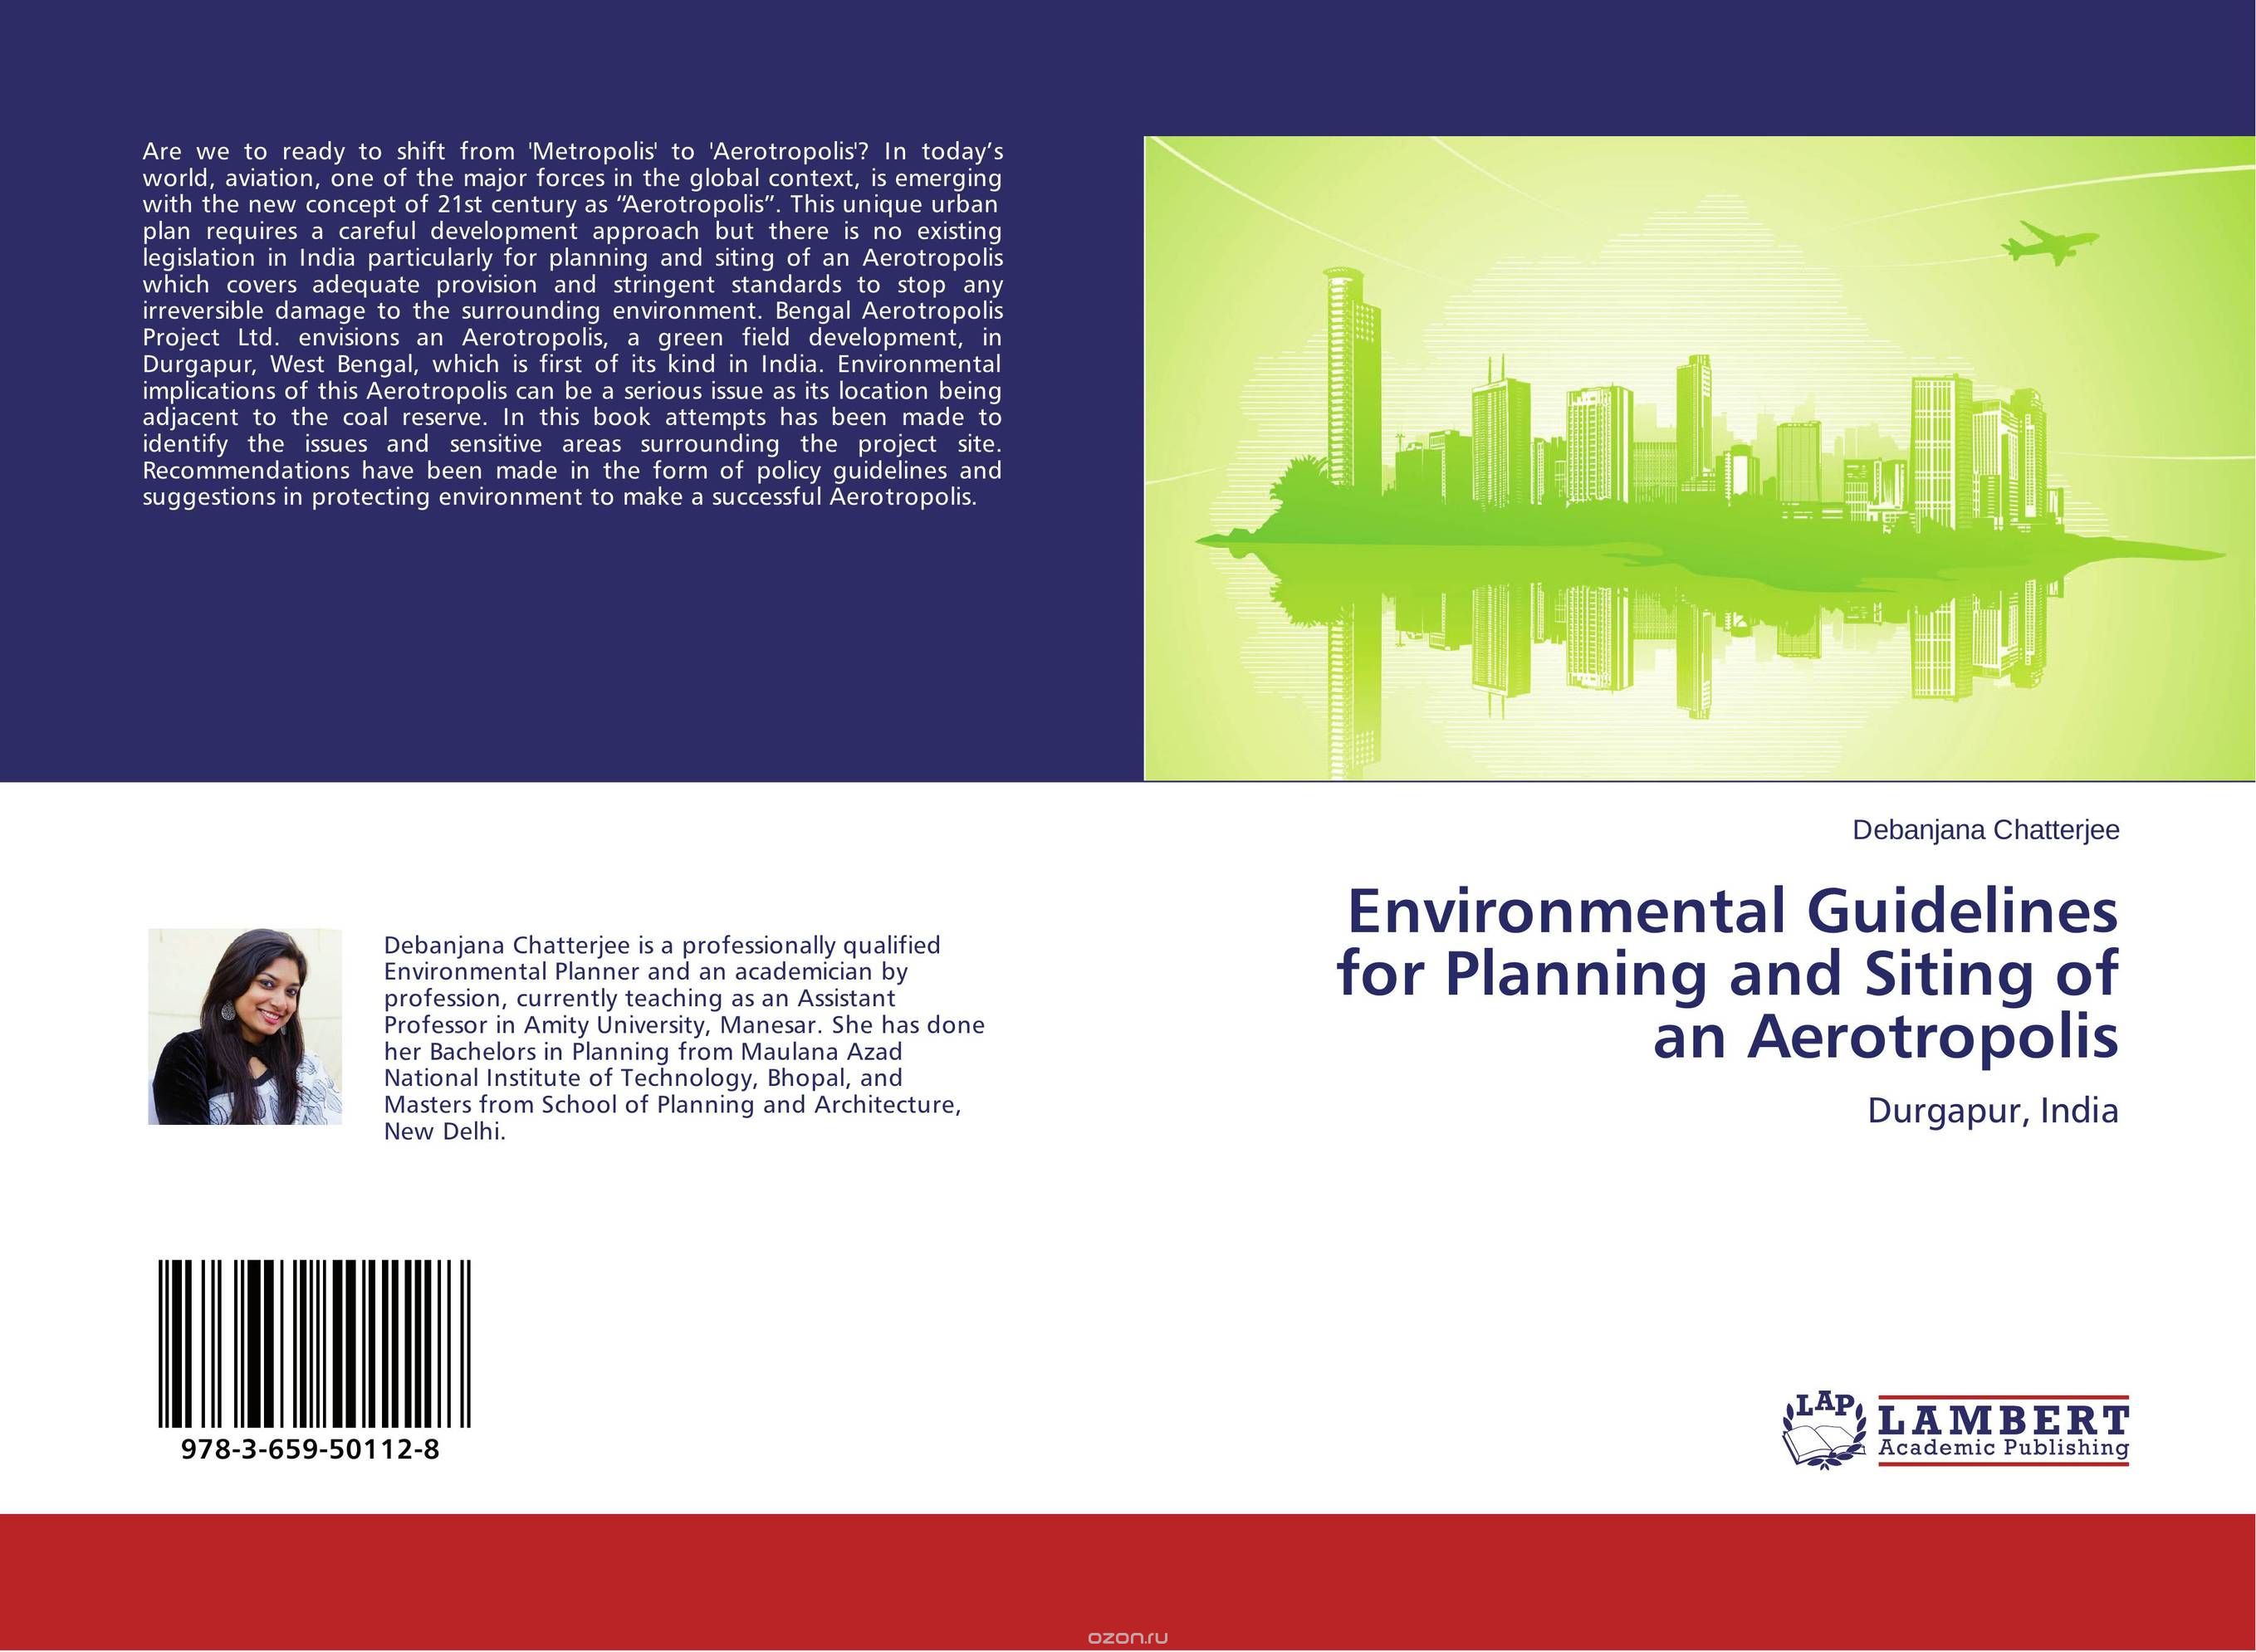 Скачать книгу "Environmental Guidelines for Planning and Siting of an Aerotropolis"